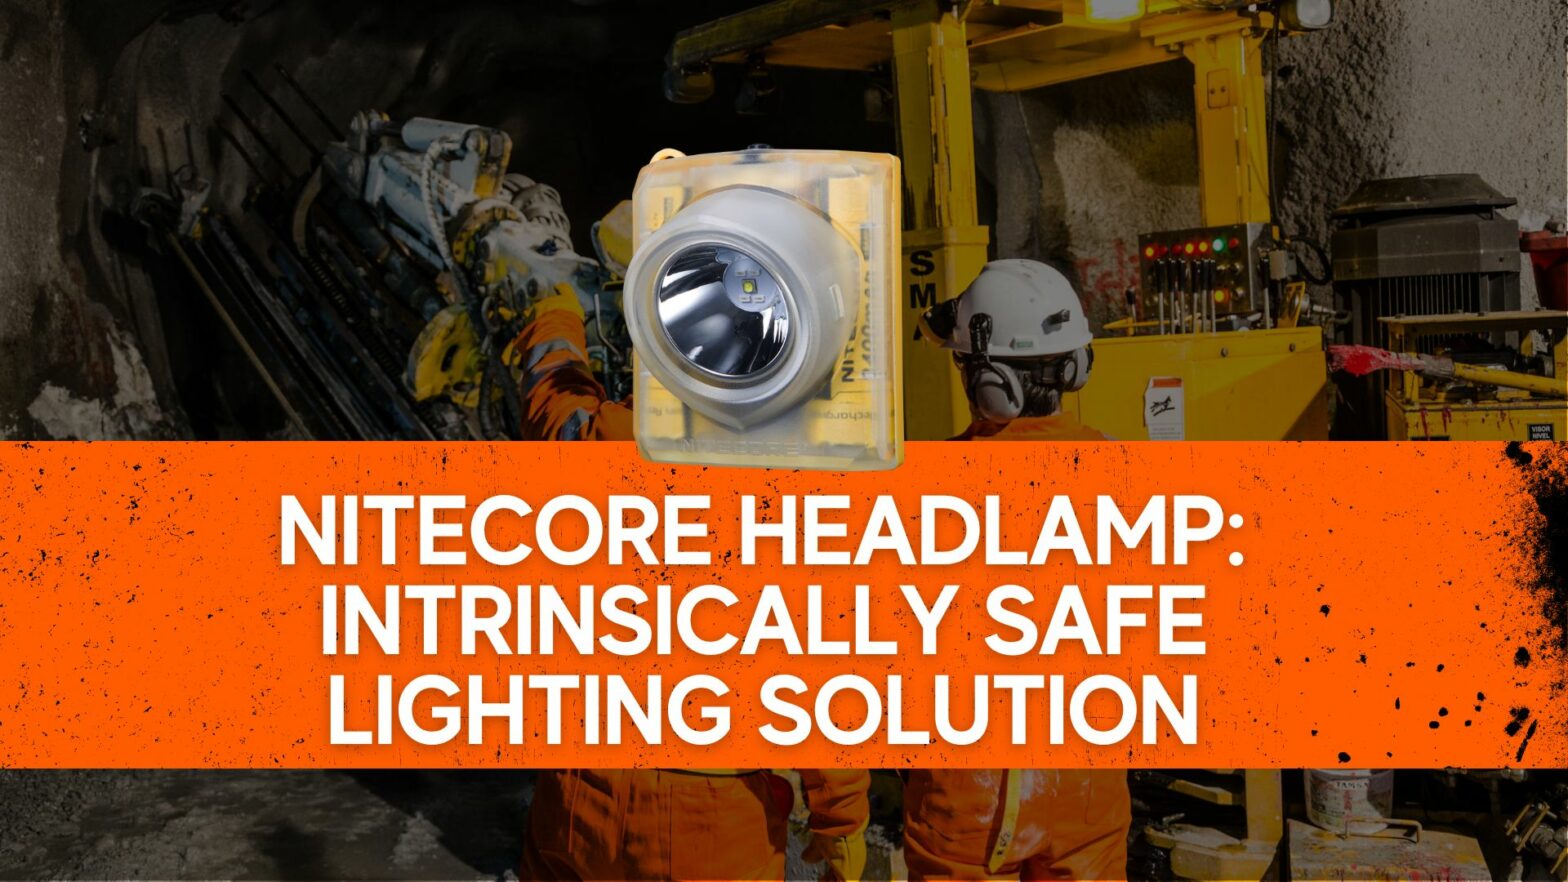 Nitecore Headlamp Intrinsically safe lighting solution